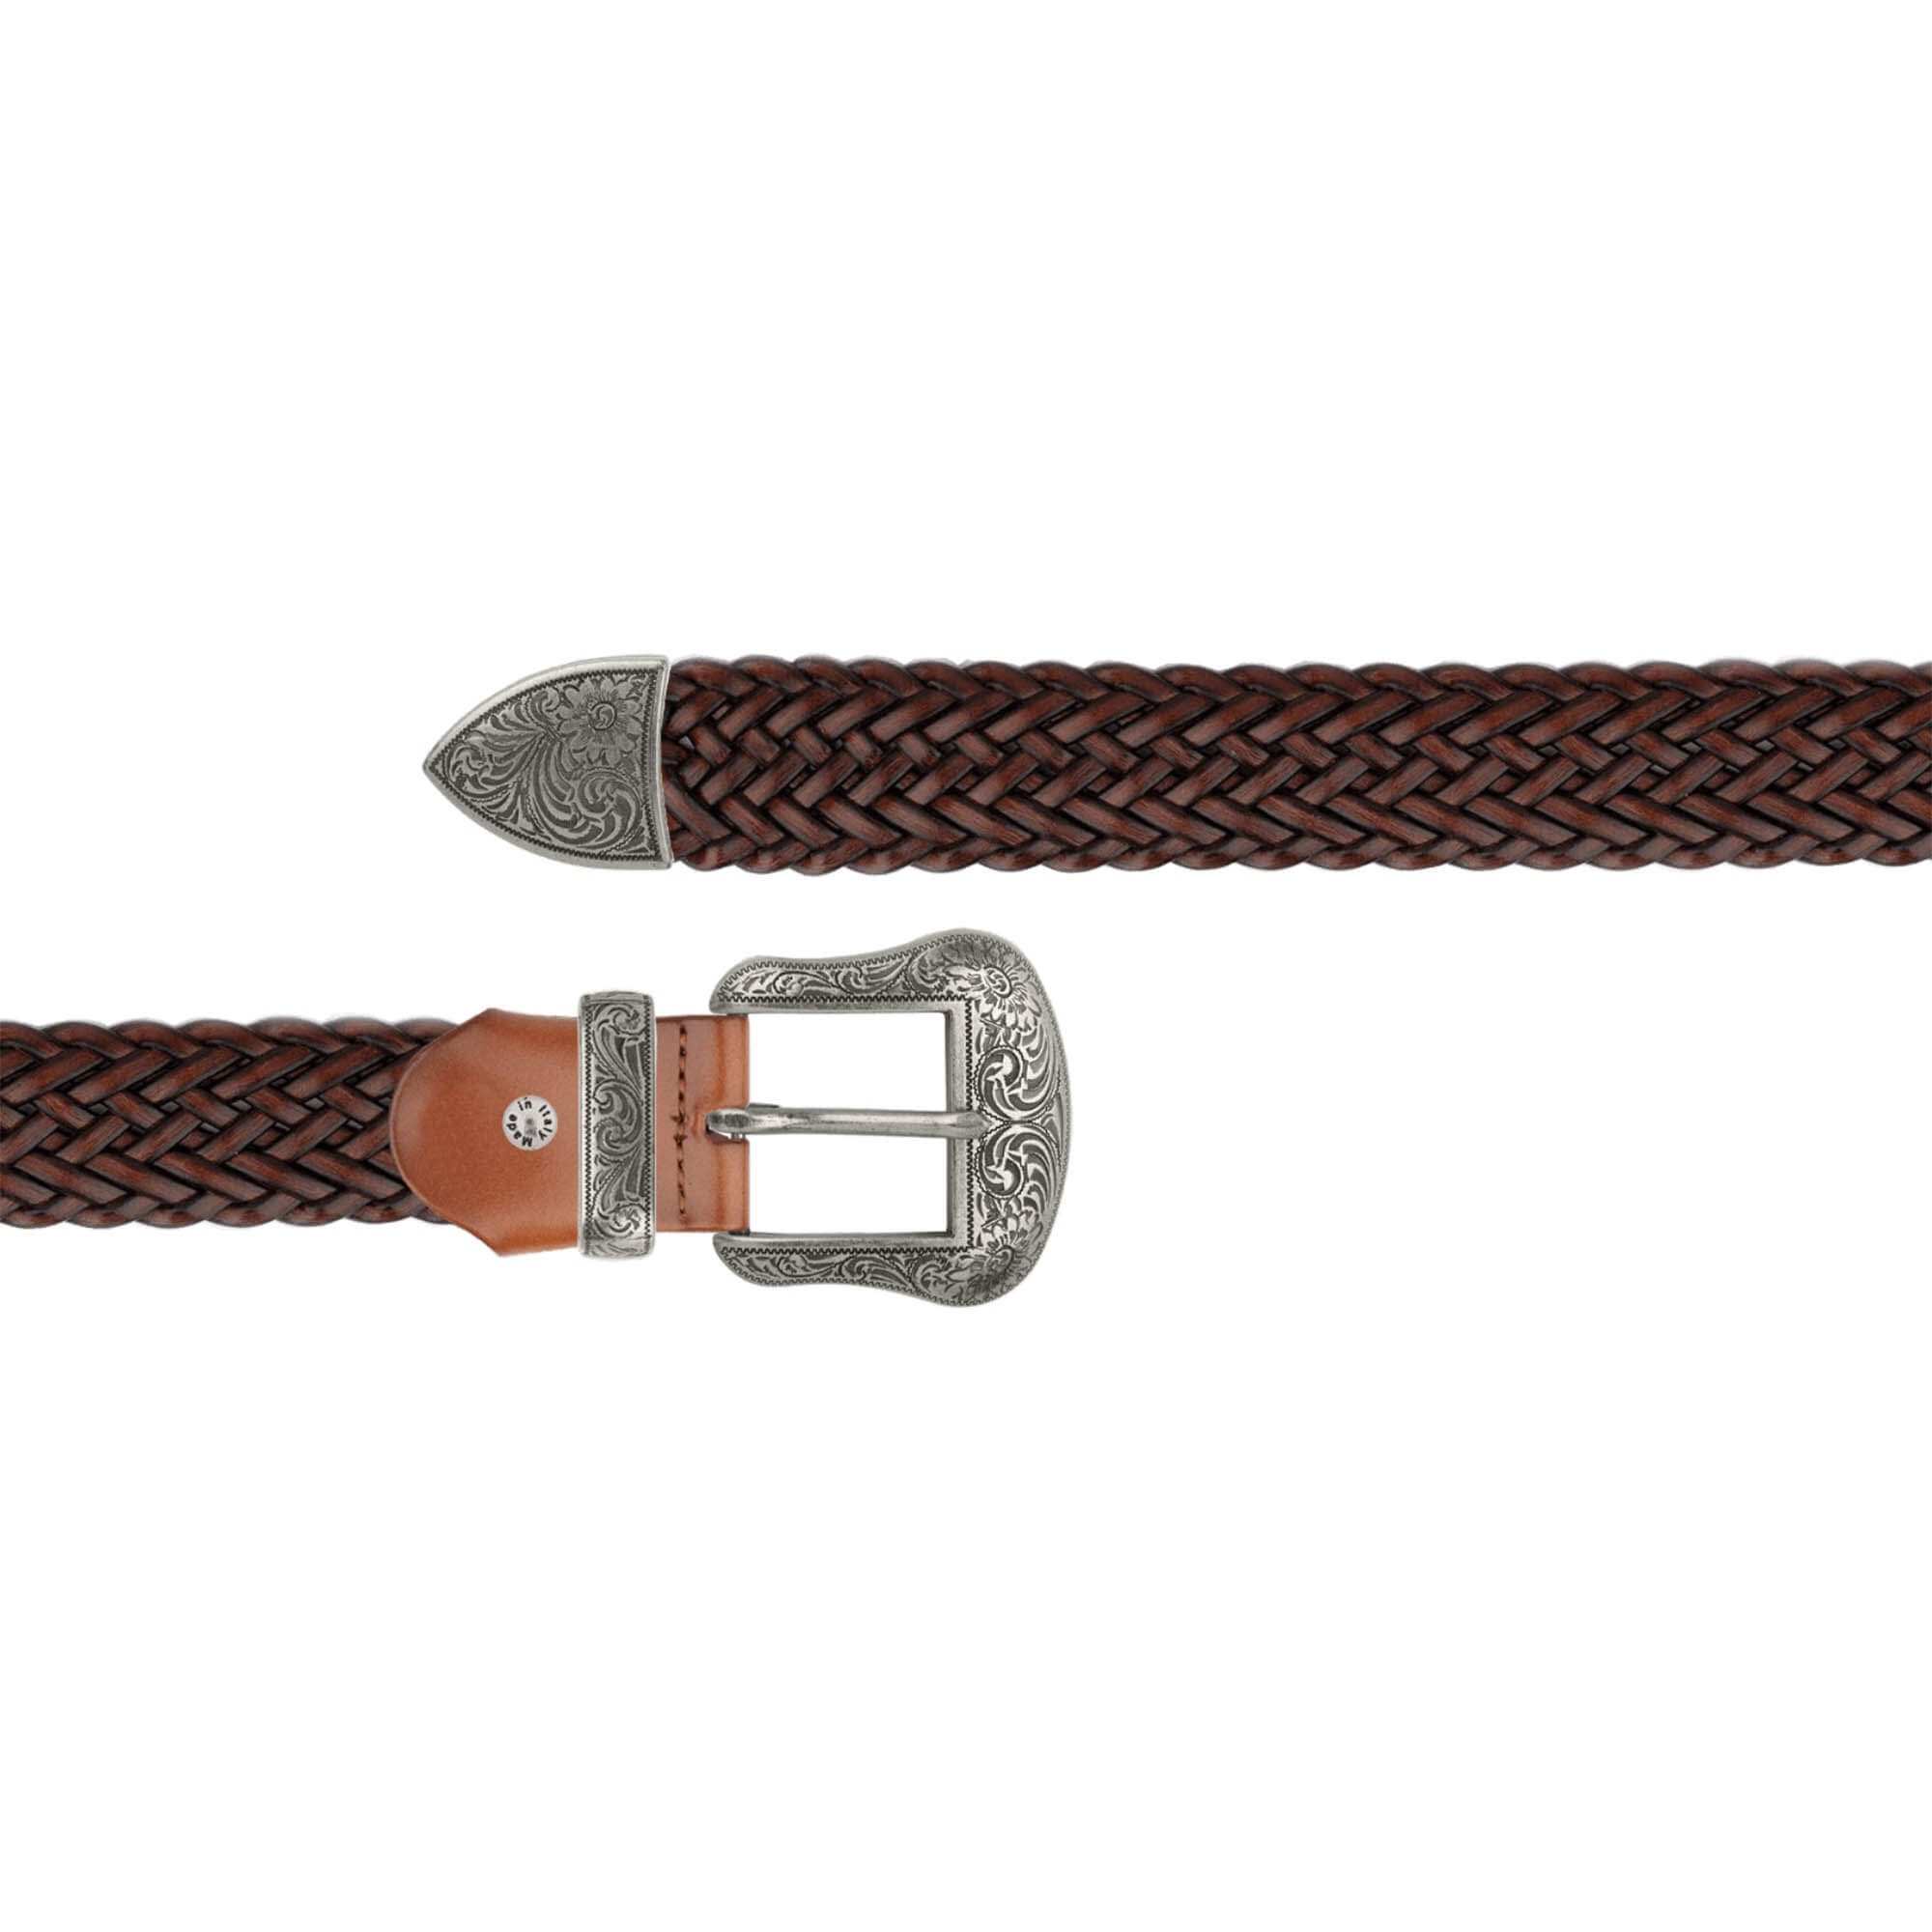 https://leatherbeltsonline.com/wp-content/uploads/2022/12/brown-braided-western-belt-with-silver-buckle-1.jpg